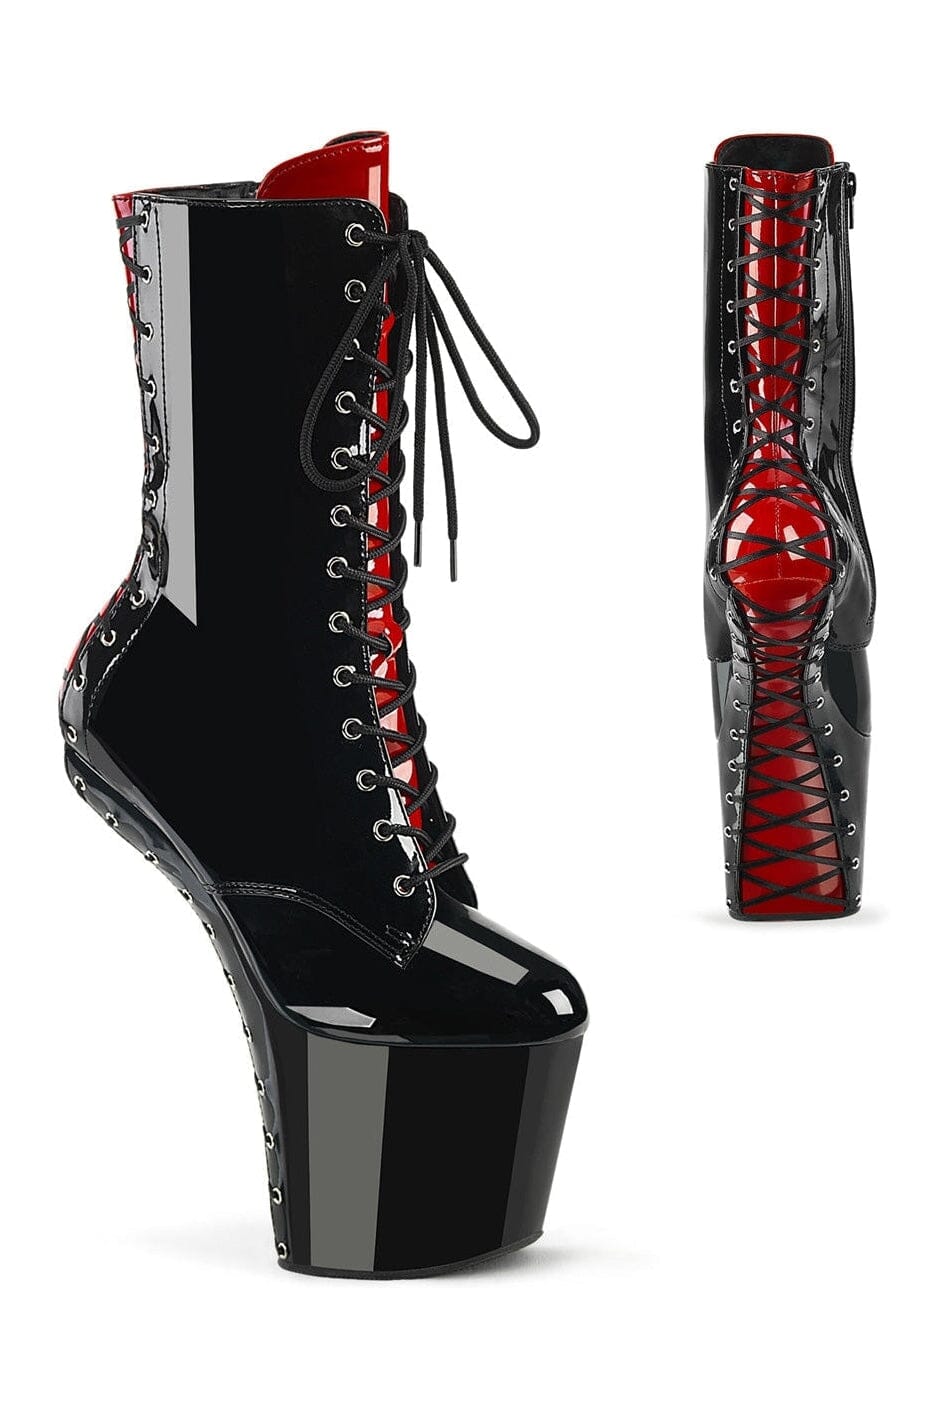 CRAZE-1040FH Black Patent Ankle Boot-Ankle Boots-Pleaser-Black-10-Patent-SEXYSHOES.COM